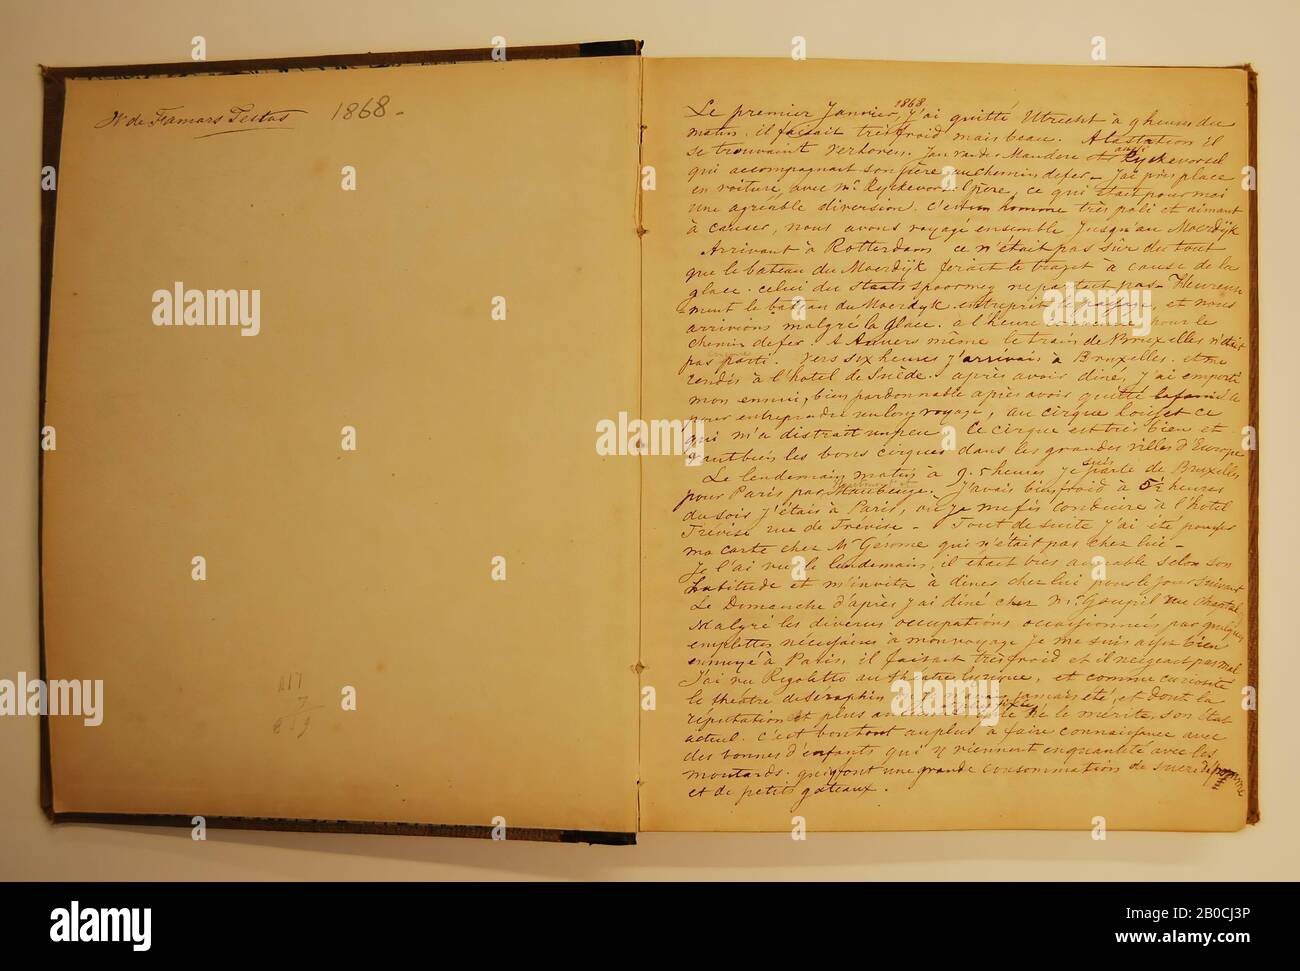 Rezeptionsantiquität, Tagebuch, Papier, 21,3 x 17,5 cm, Eröffnung 21,3 x 35,8 cm, ab dem Jahr 1868 Stockfoto